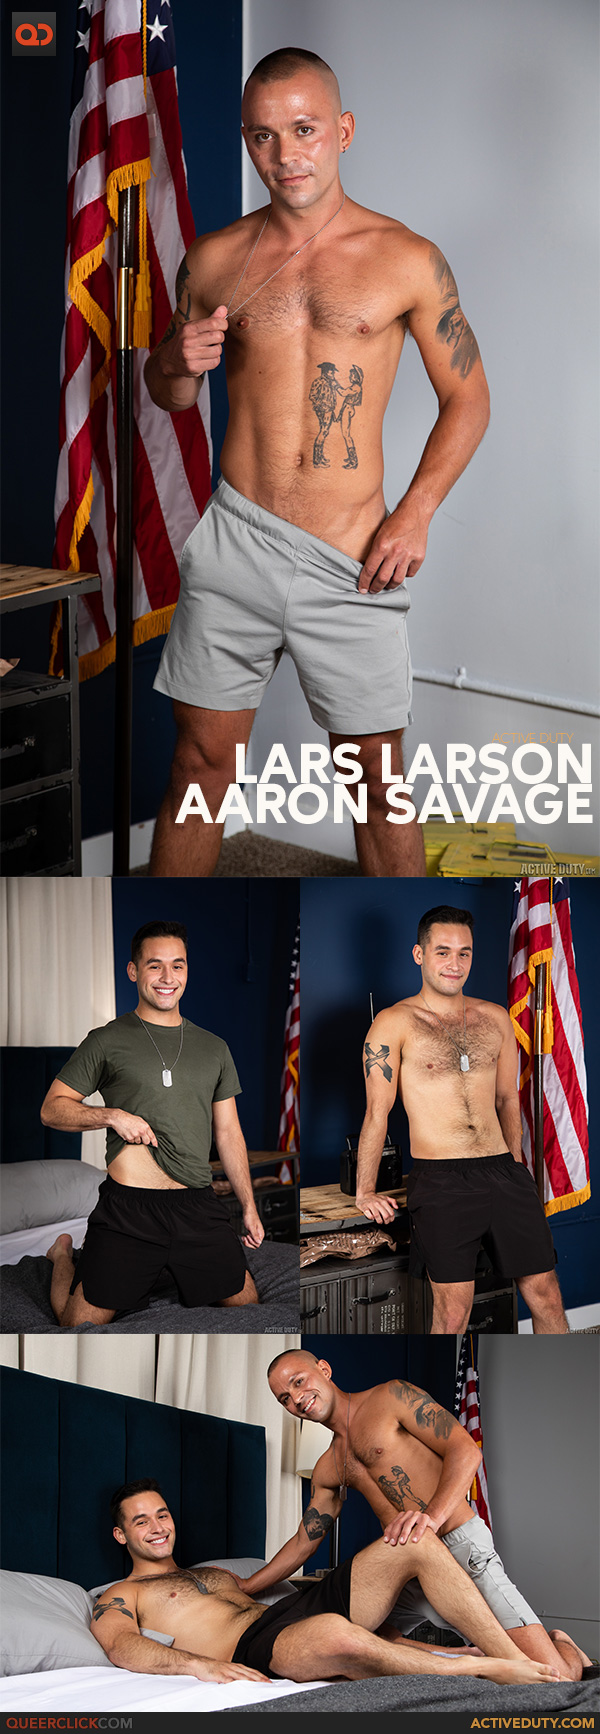 Active Duty: Aaron Savage and Lars Larson